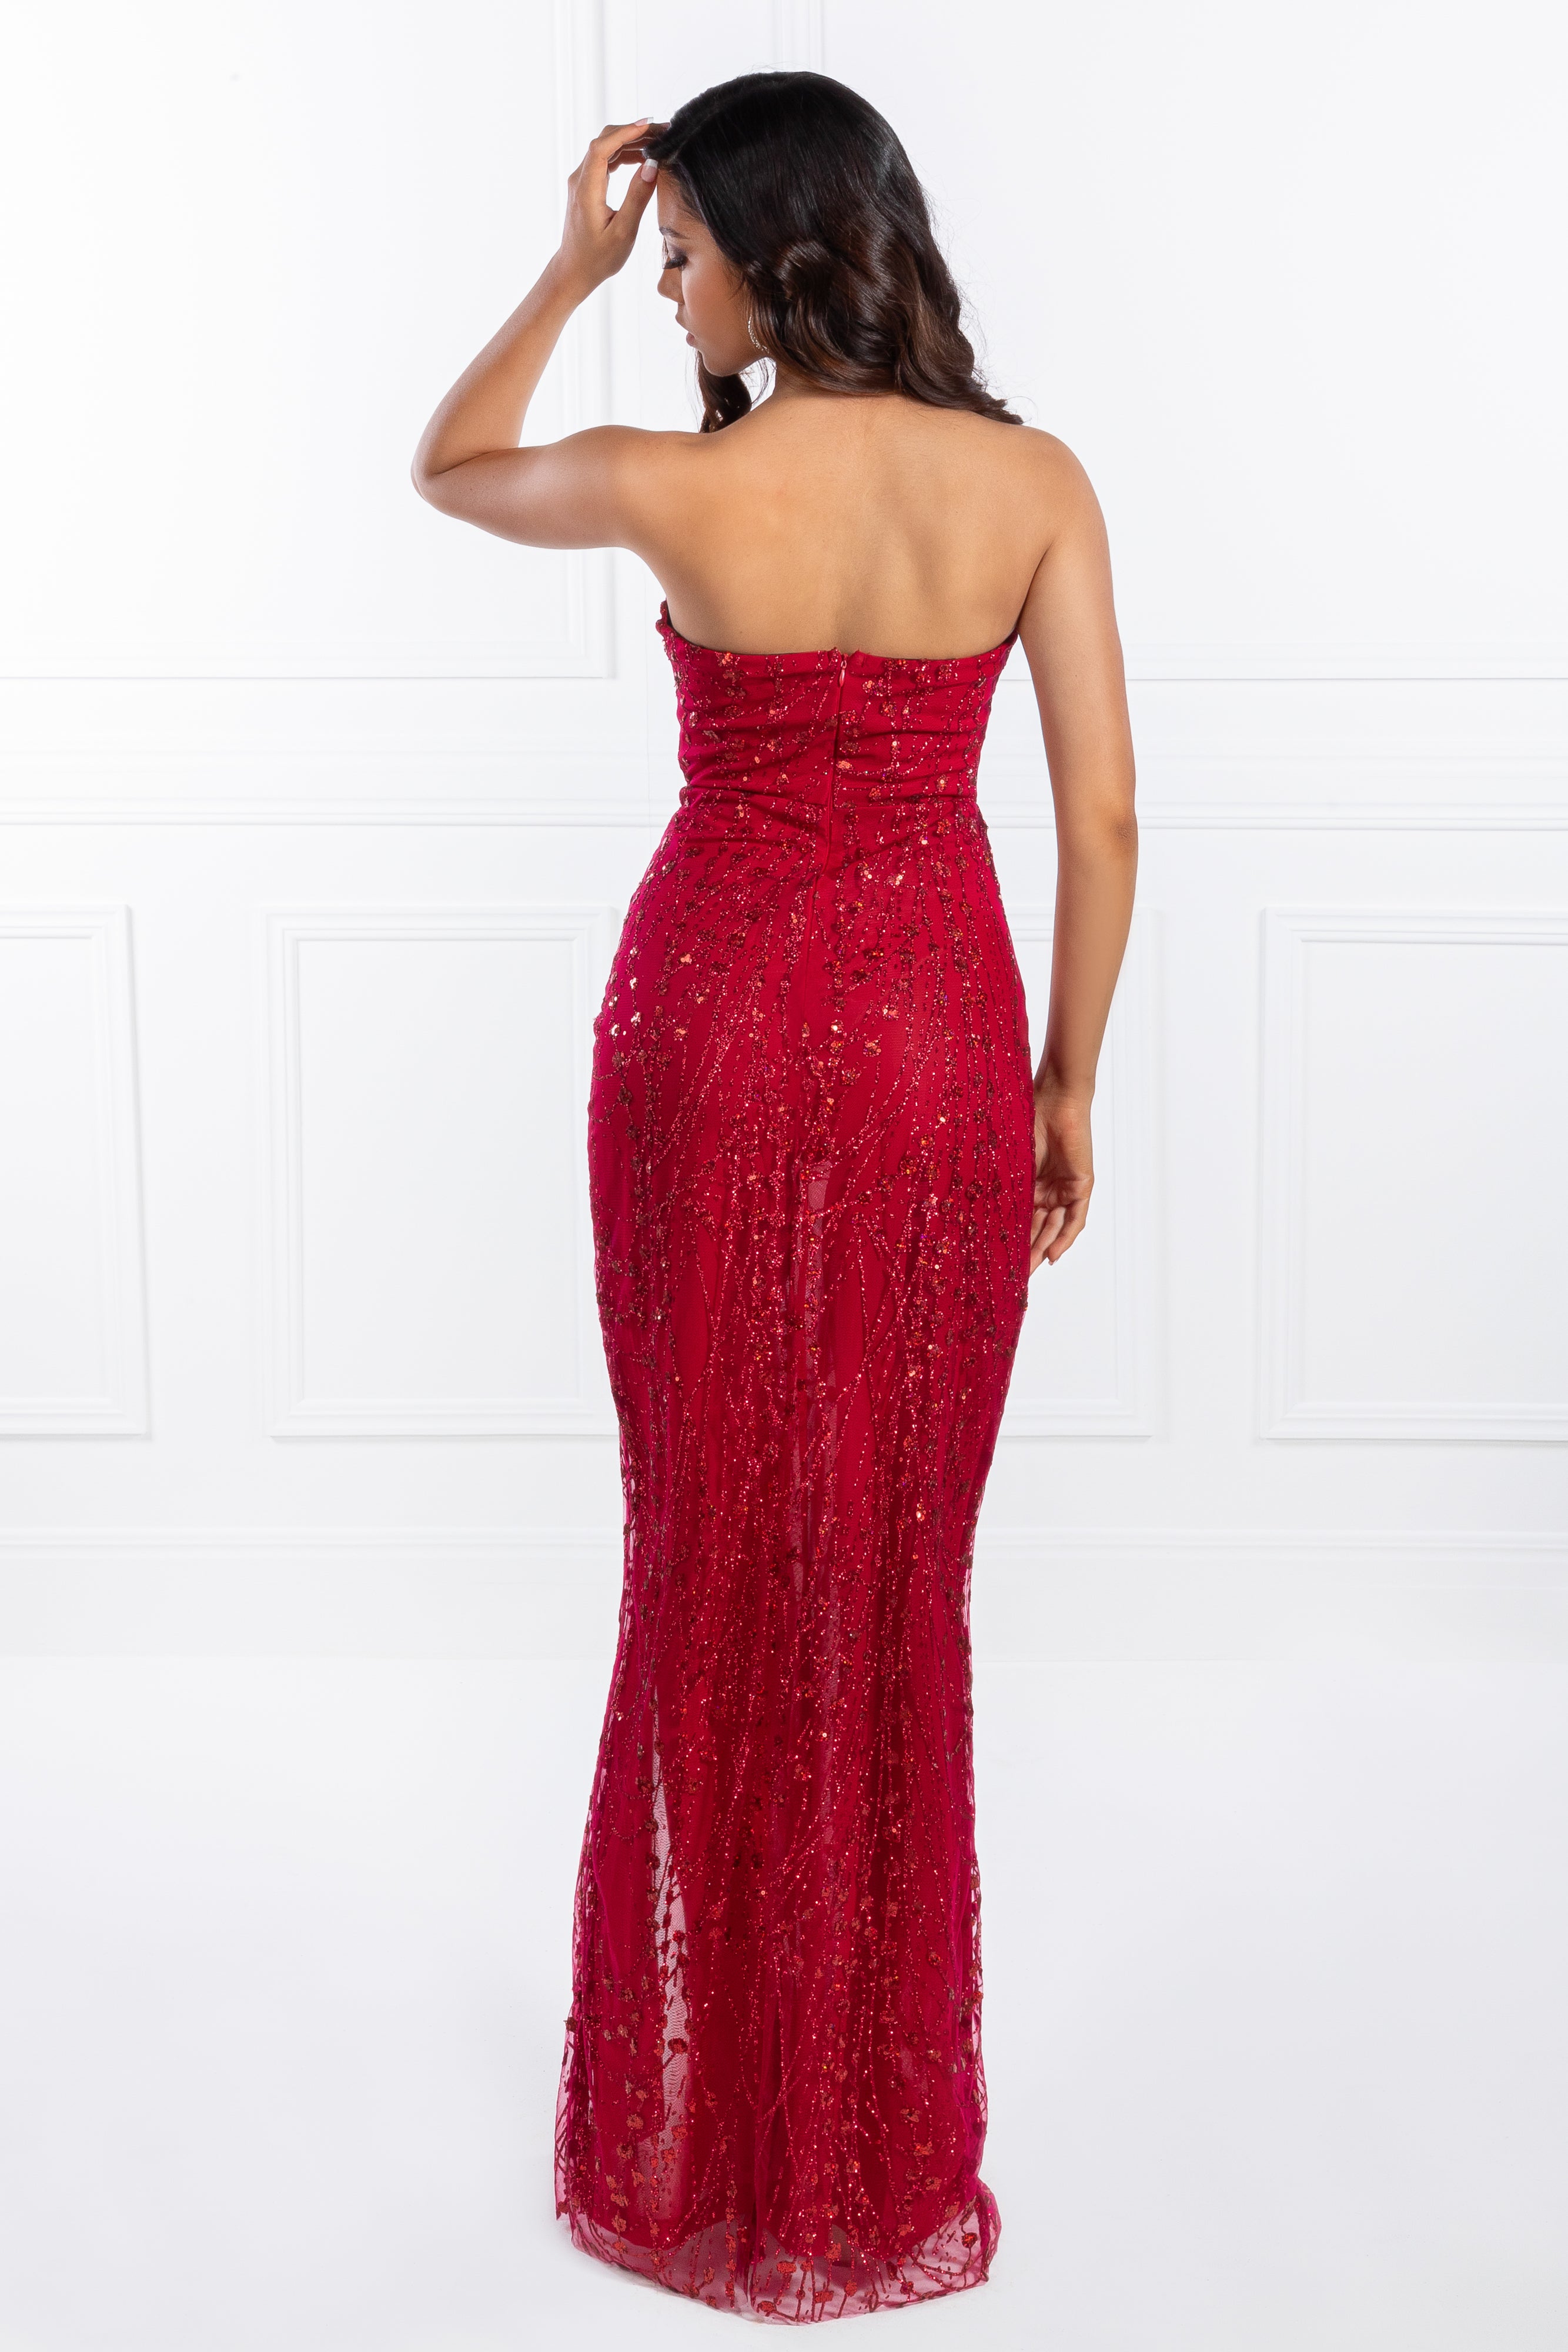 Honey Couture EMILYA Red Strapless Glitter Overlay Evening Gown Dress